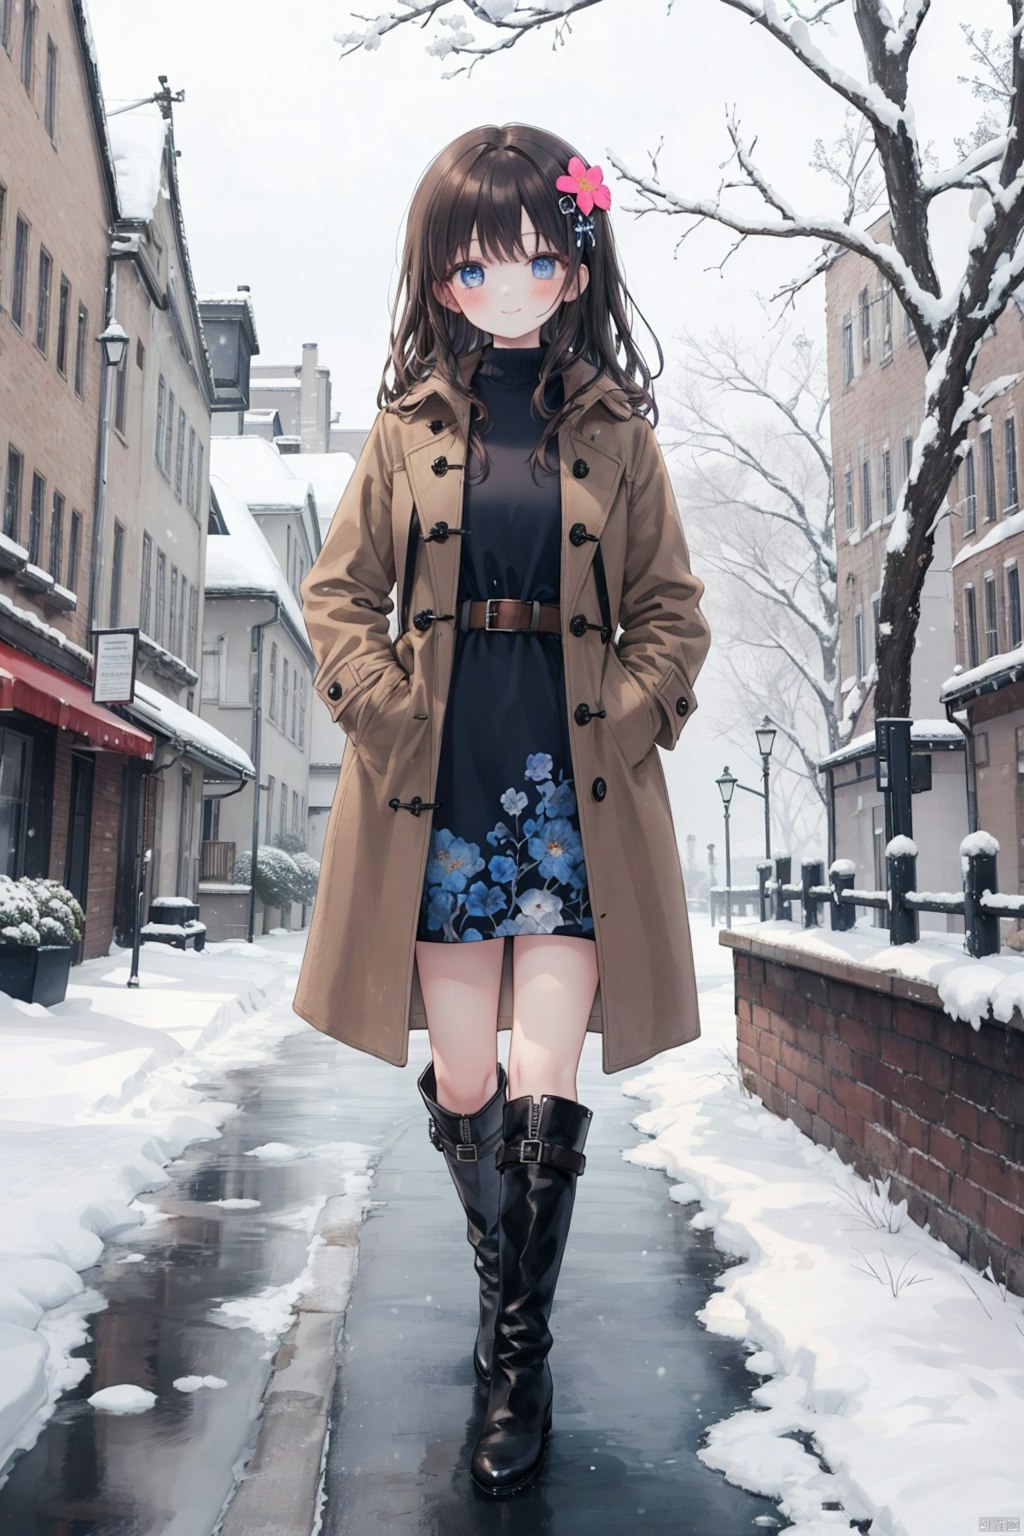 Trench coat girl